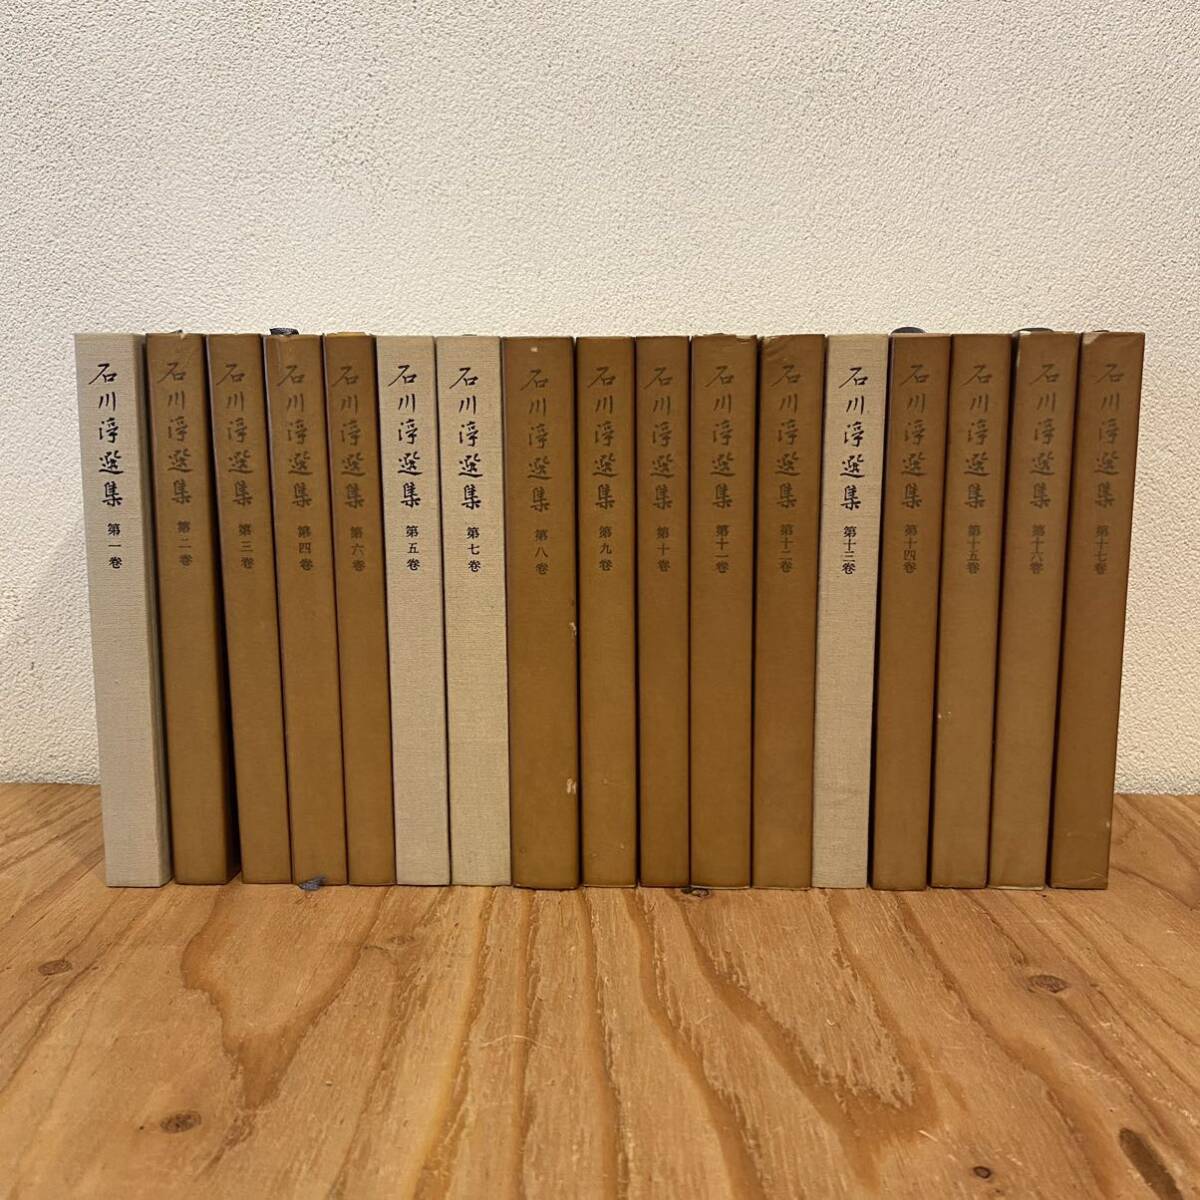  Ishikawa Jun выбор сборник ( Iwanami книжный магазин ) все 17 шт .. комплект 